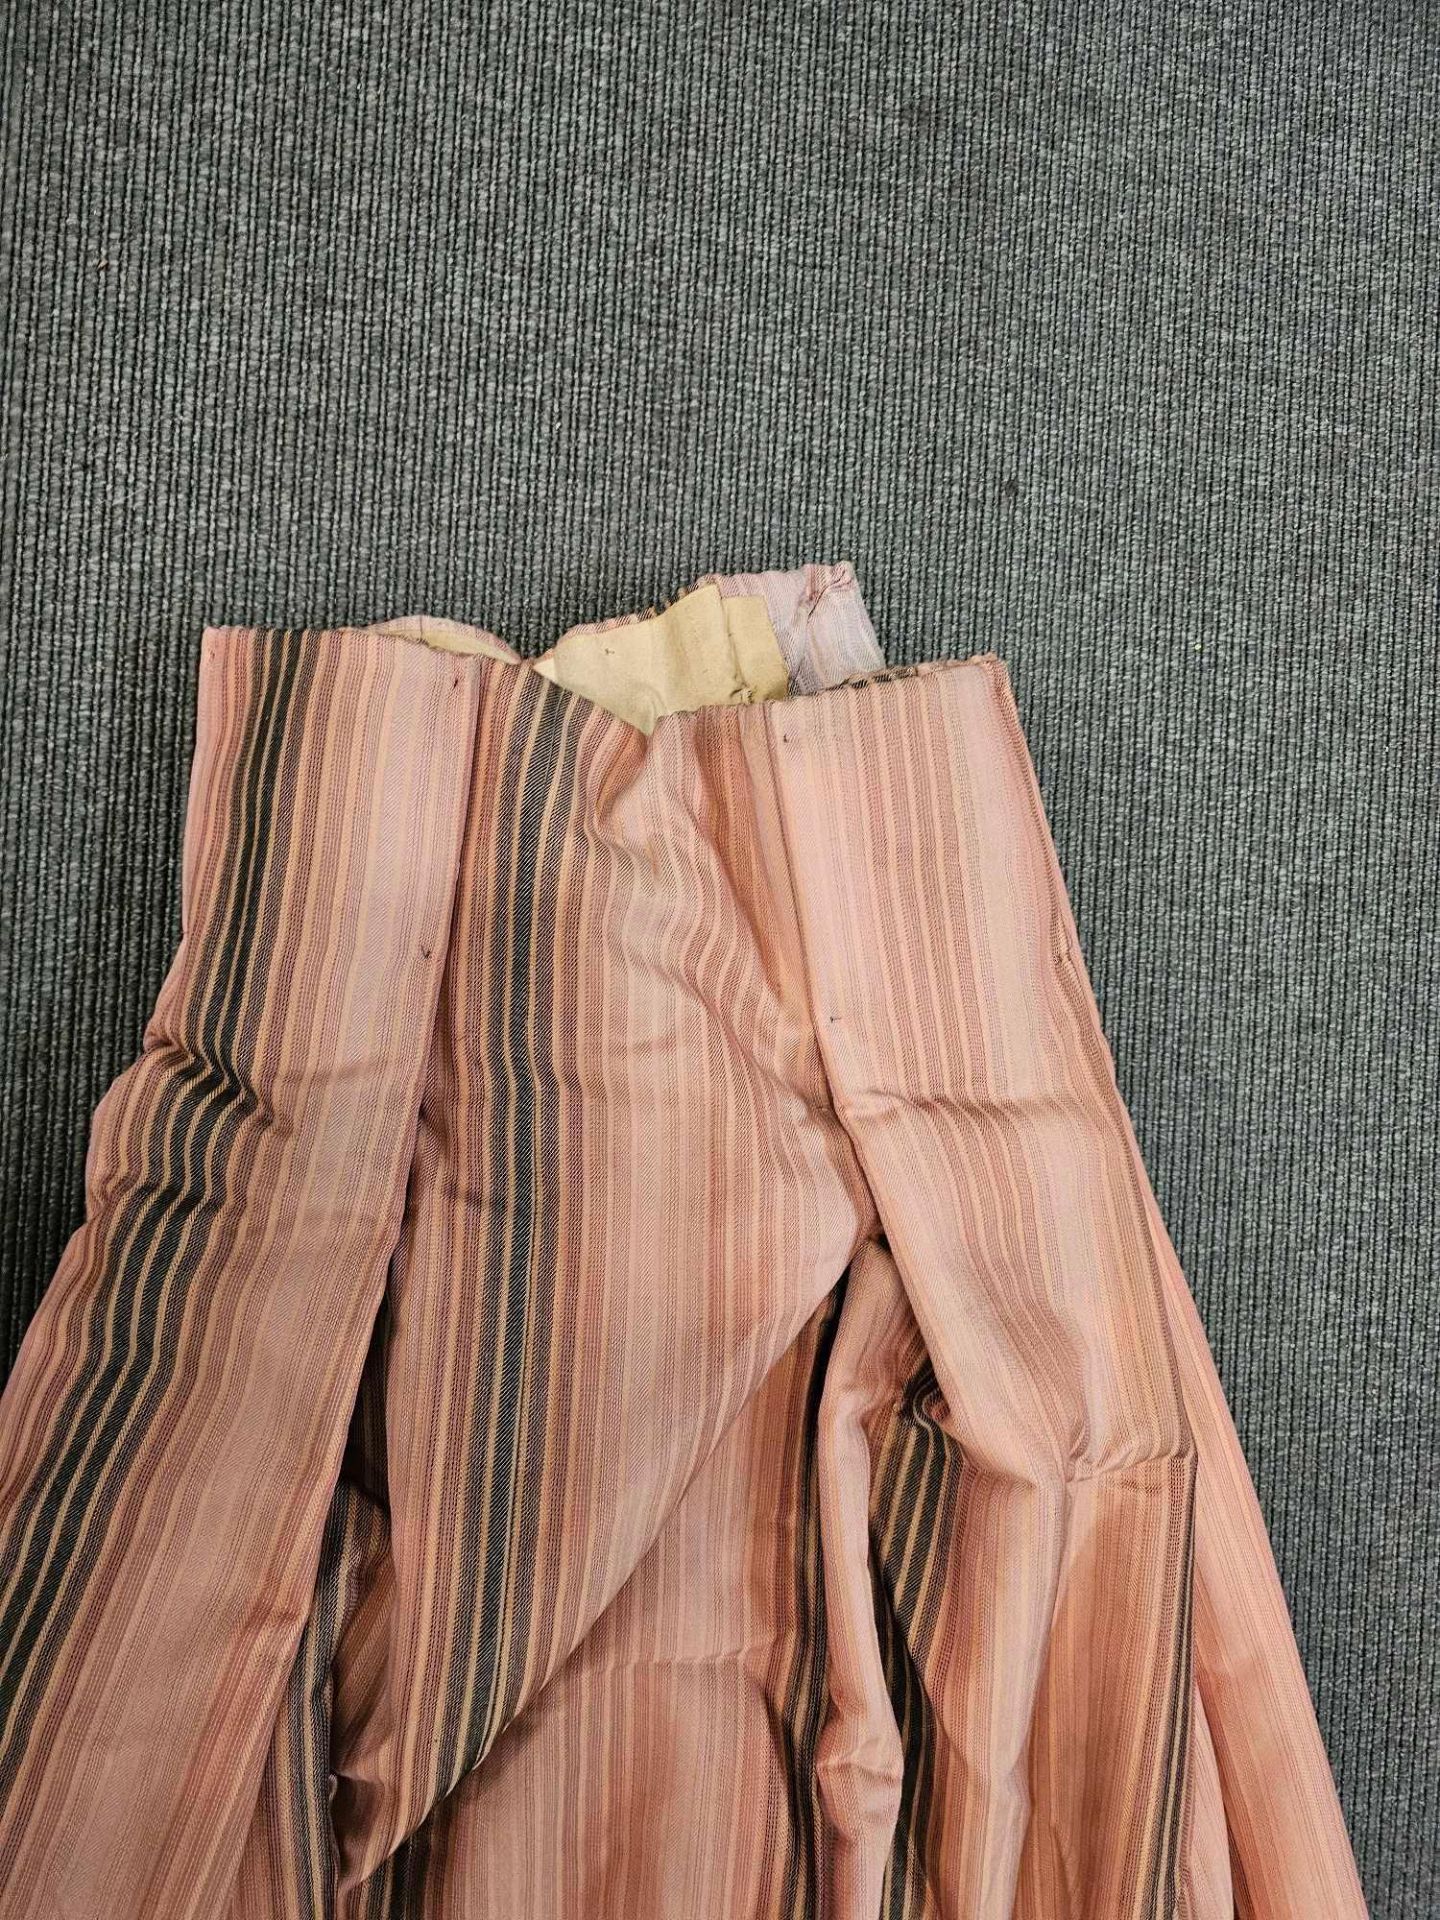 A Pair Silk Drape Pink /Grey StripesSize -cm 132 x 310 Ref Dorch 56 - Image 2 of 3